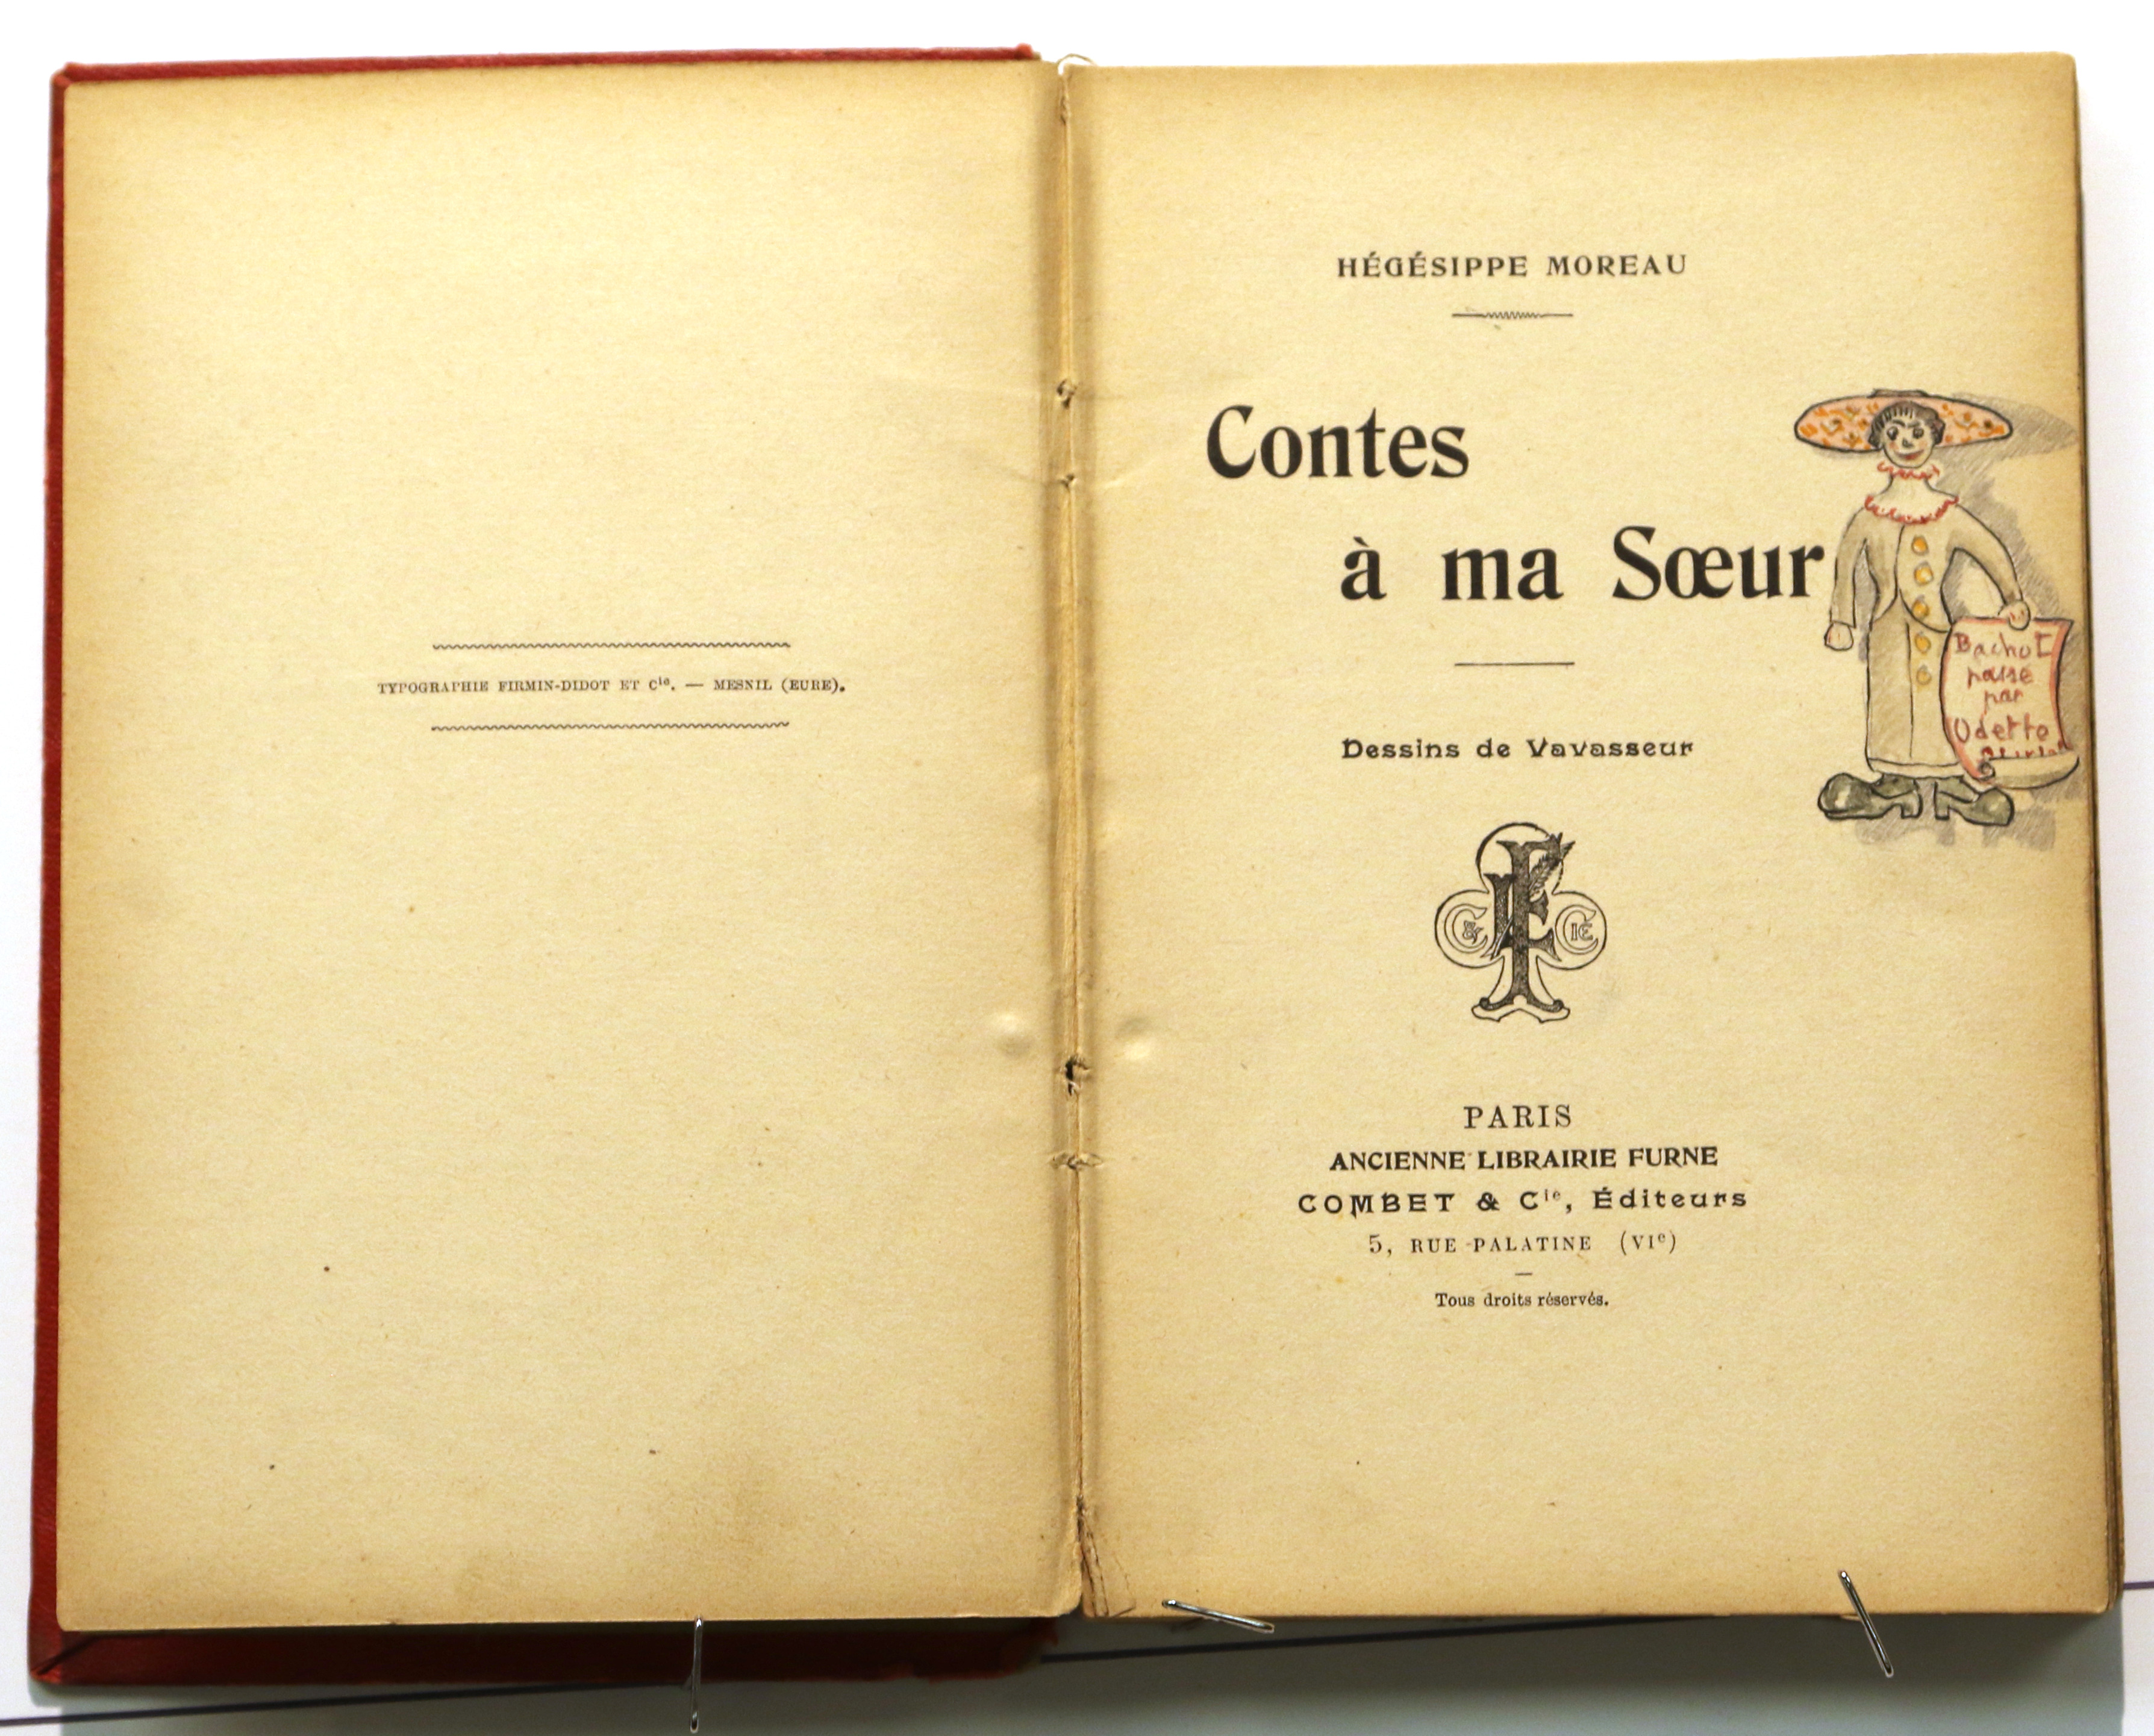 Title page.  Contes à ma Sœur, illustrations.  Jean Charlot.